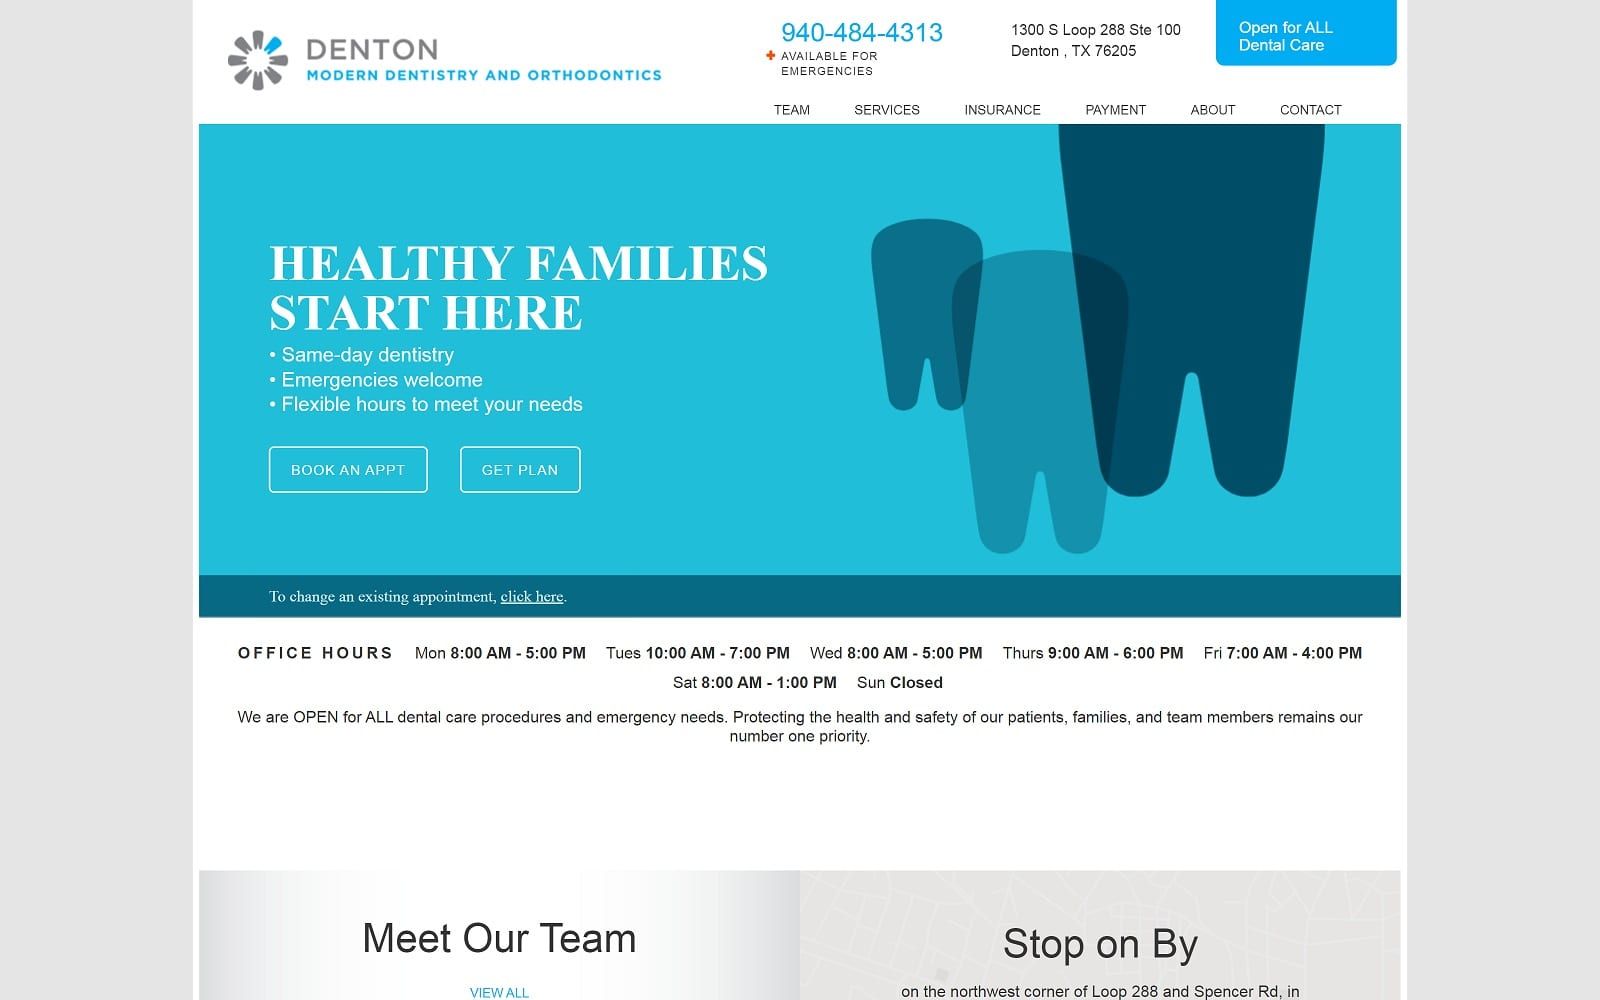 The screenshot of denton modern dentistry and orthodontics dentonmoderndentistry. Com website